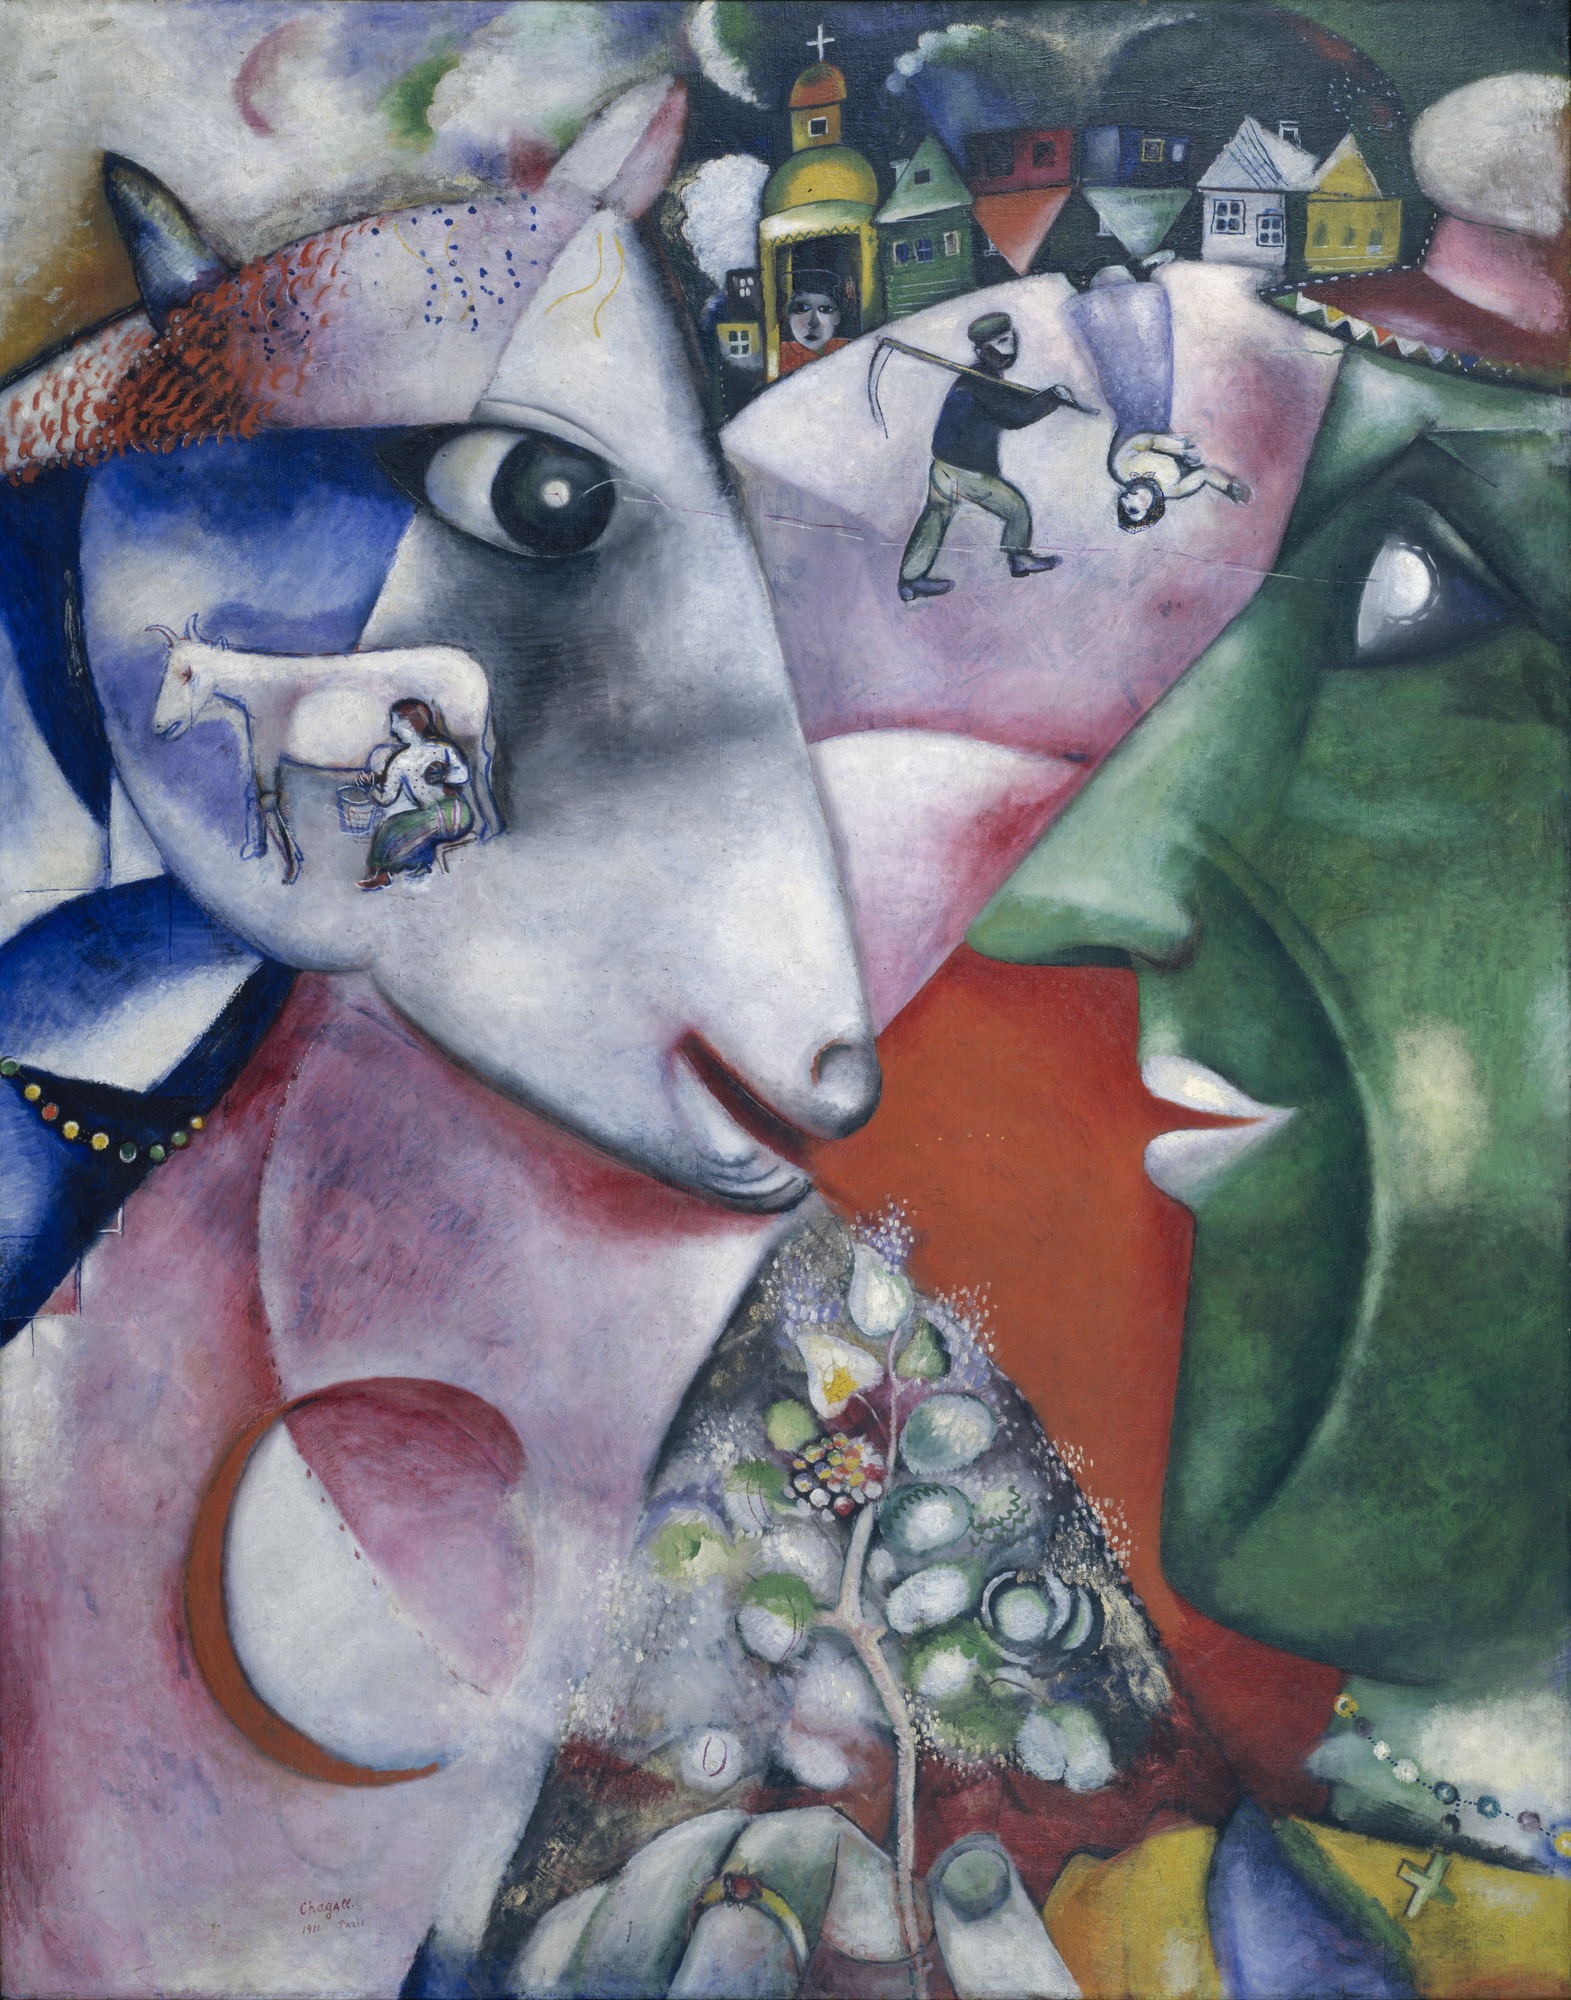 Moi et le village by Marc Chagall - 1911 - 191 x 150.5 cm Museum of Modern Art